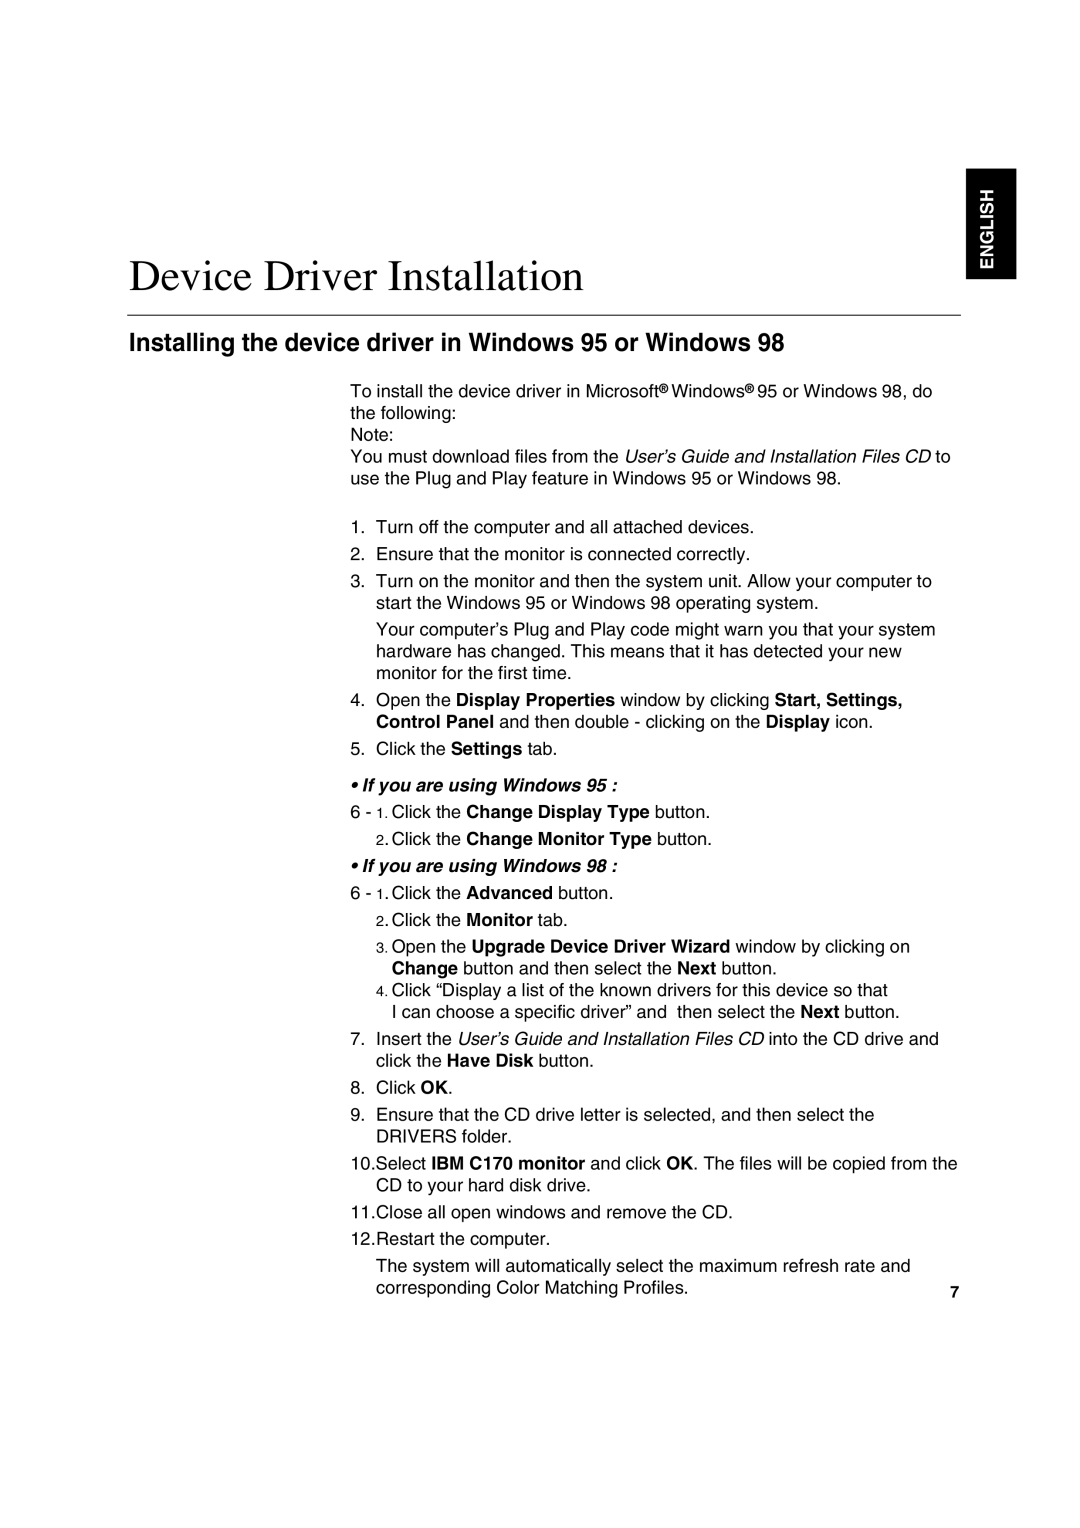 IBM C170 manual Device Driver Installation, Installing the device driver in Windows 95 or Windows, If you are using Windows 